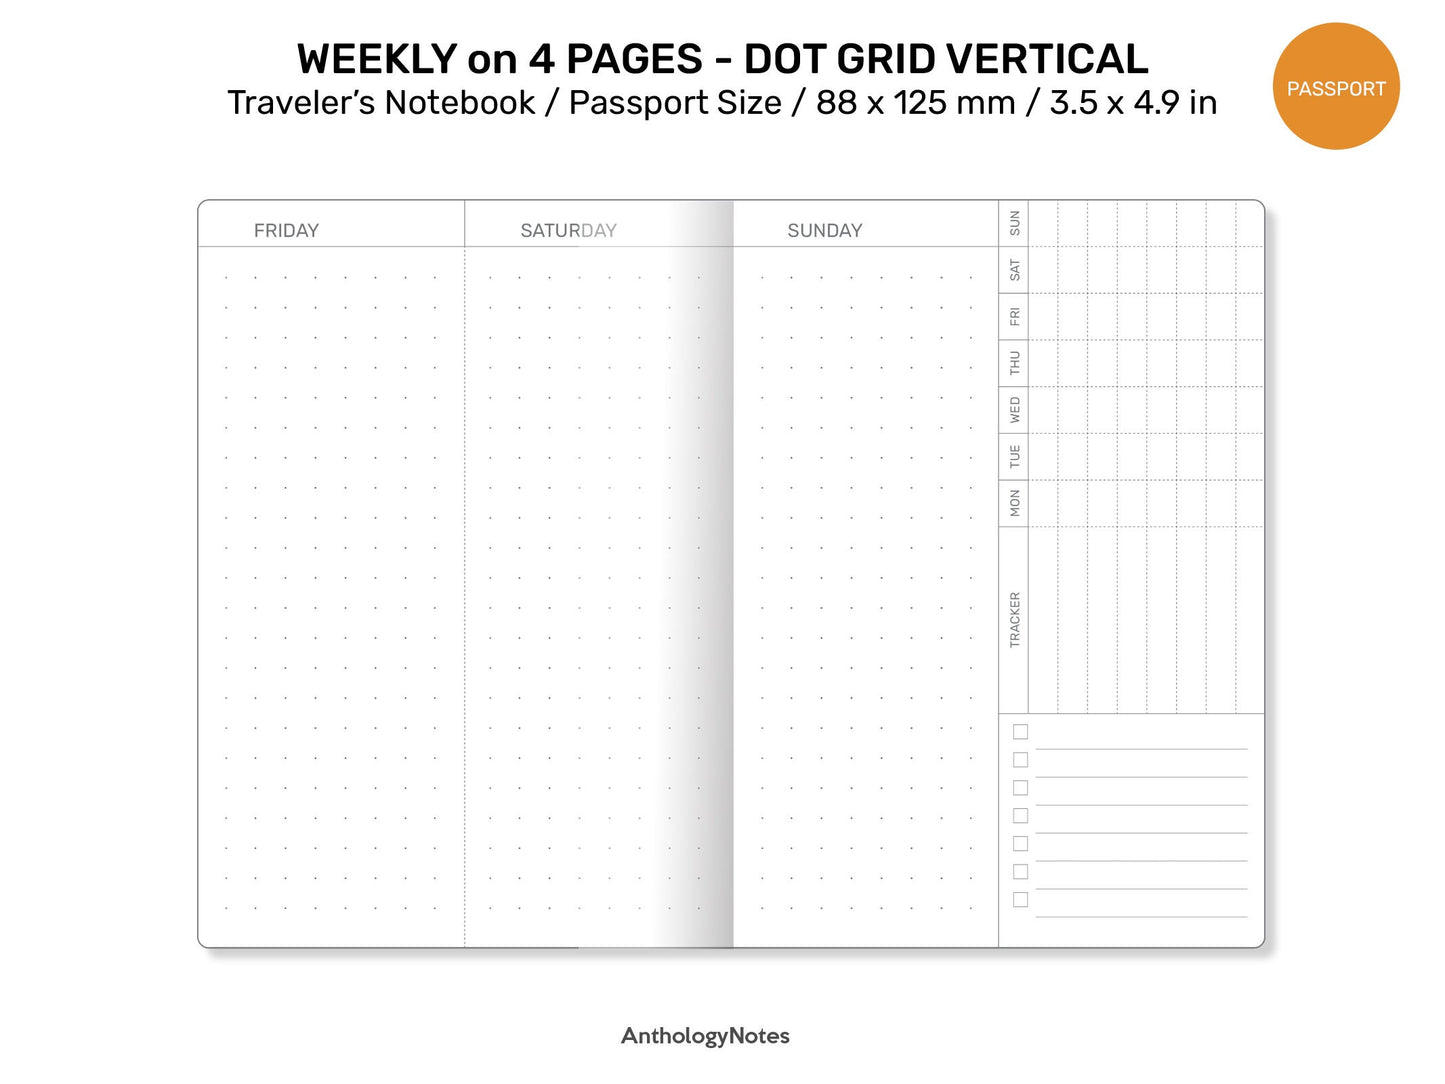 PASSPORT WEEKLY Dot Grid Vertical Traveler's Notebook Printable Insert with Tracker Minimalist Wo4P